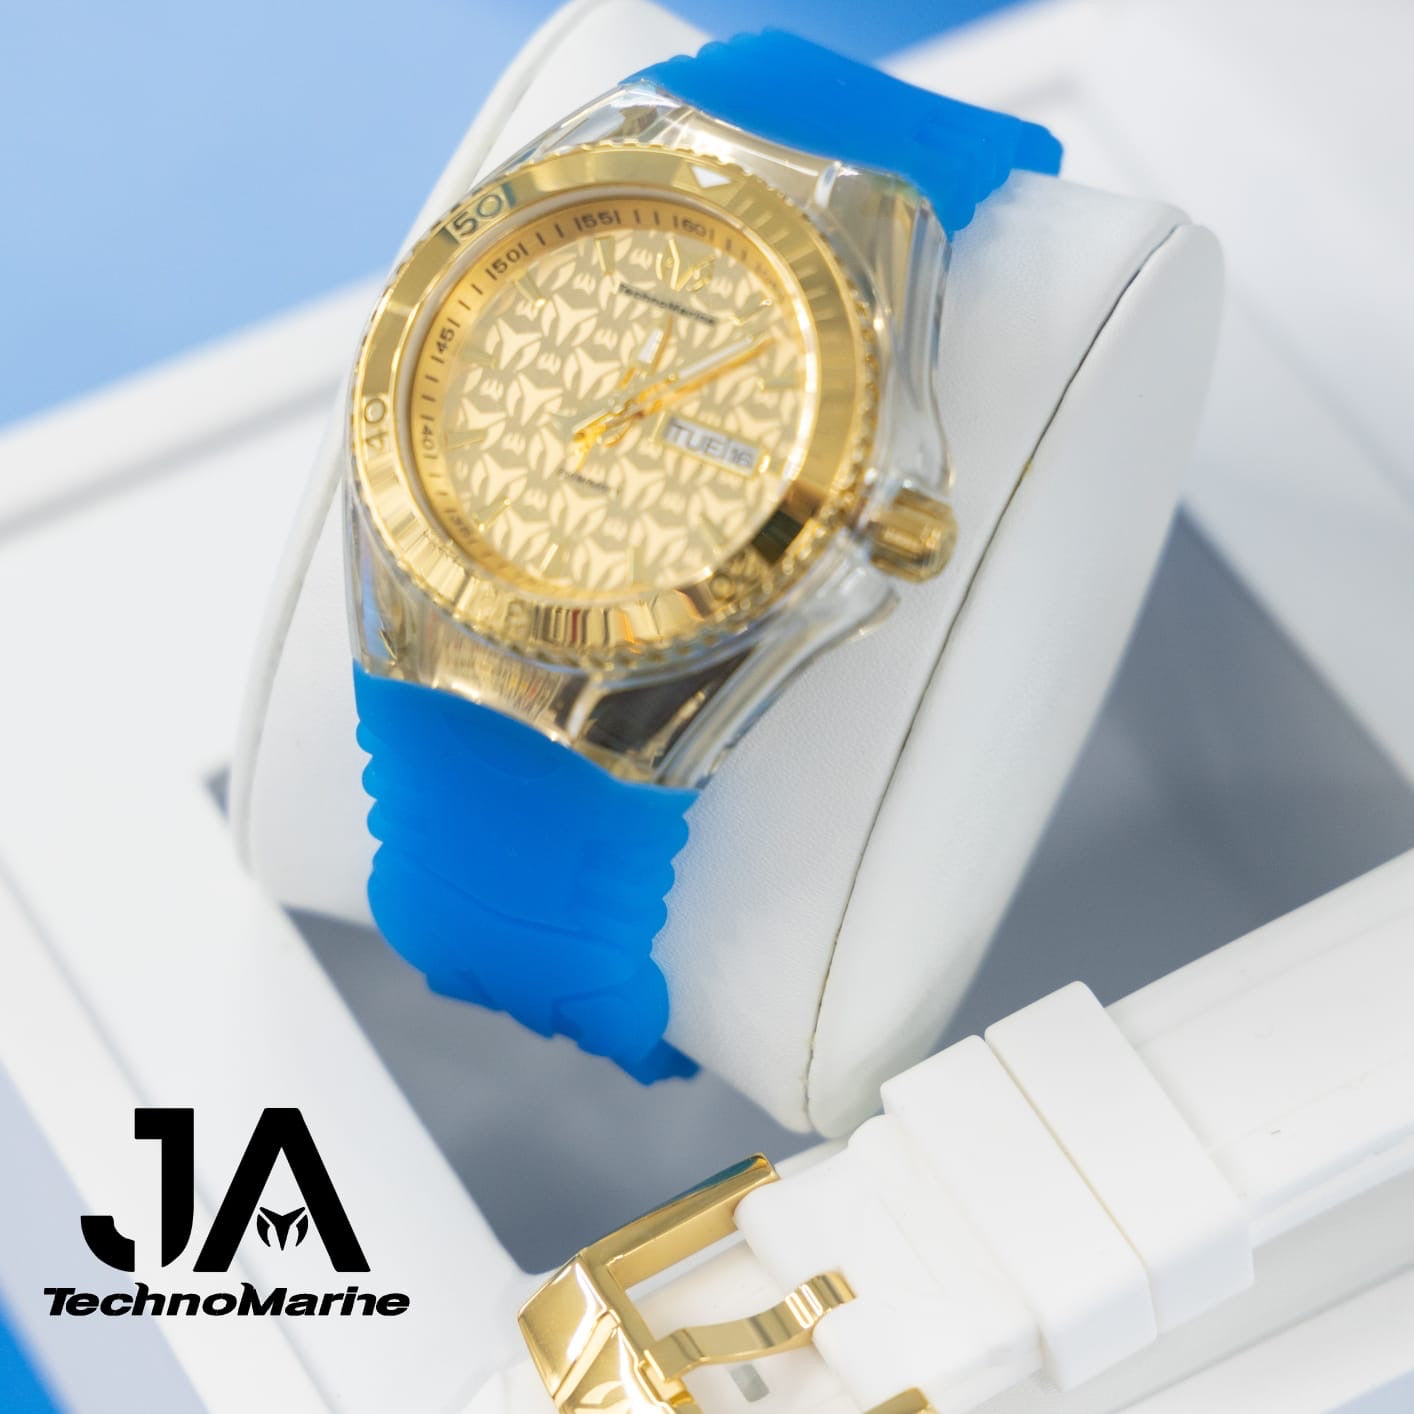 Technomarine 40 mm Cruise Monogram Gold Dial White And Blue Silicone Unisex Watch Una Pulcera Gratis